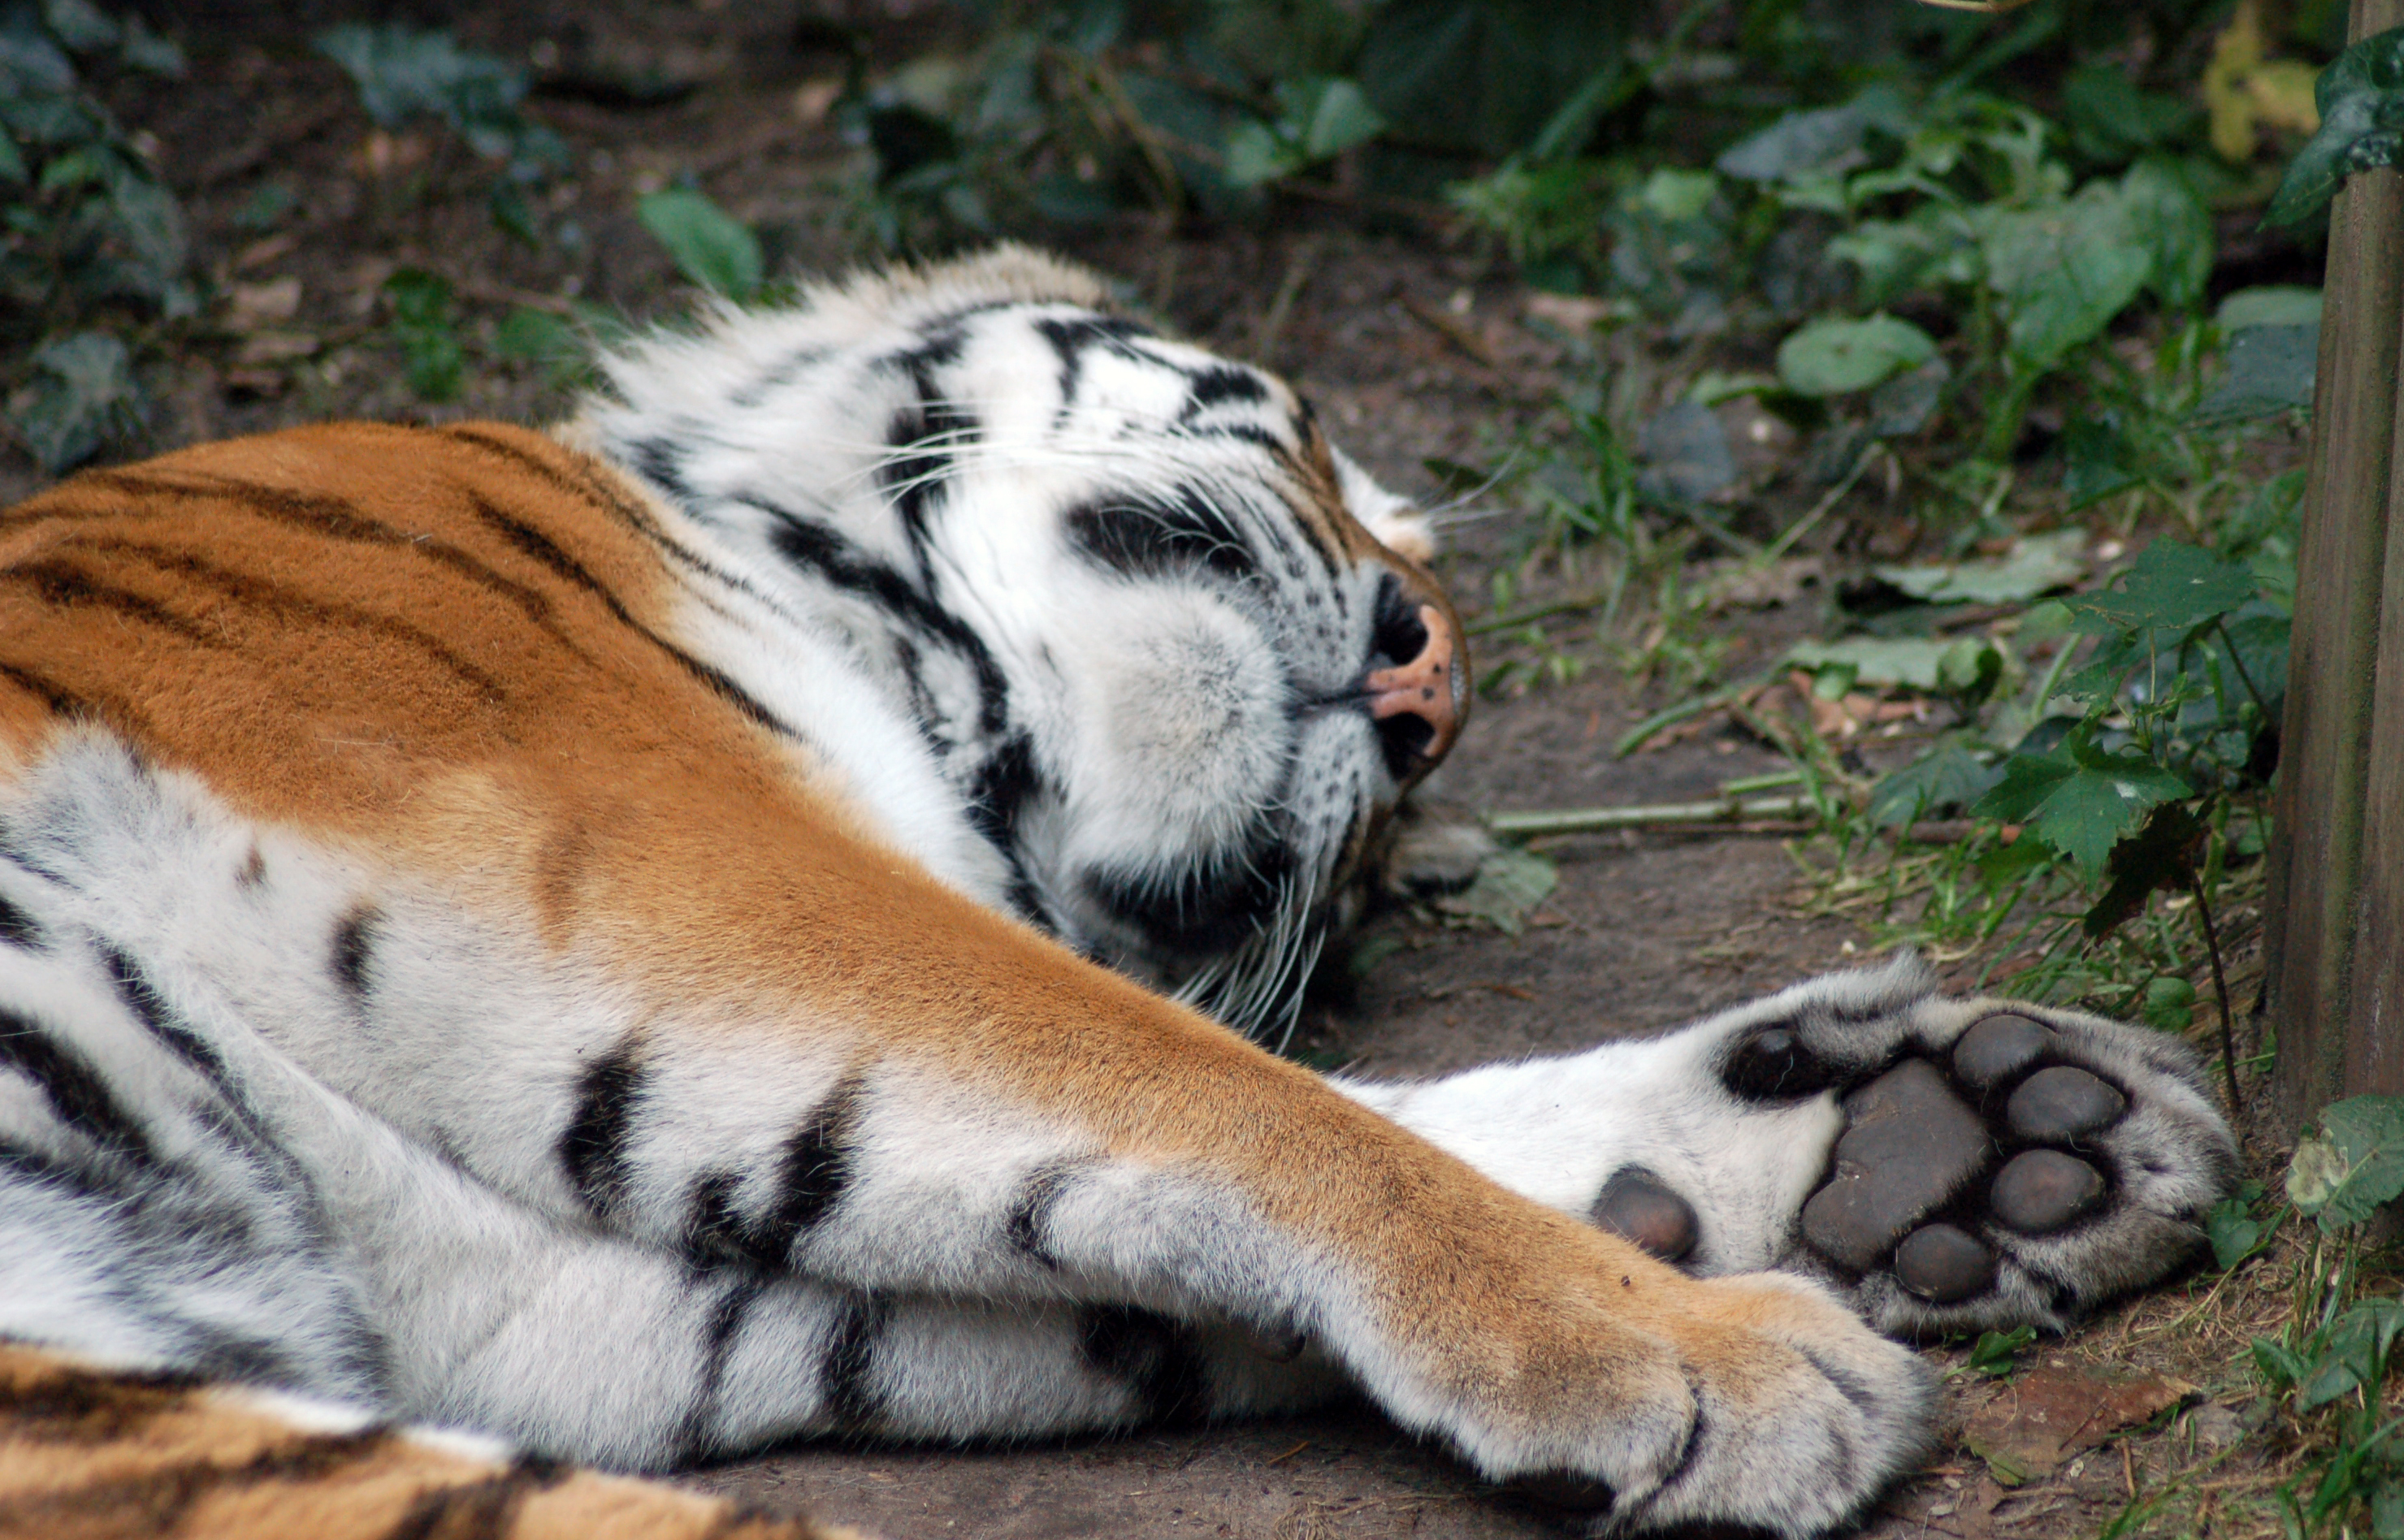 File:Sleeping tiger in Dierenpark Emmen (4991152664).jpg - Wikimedia ...